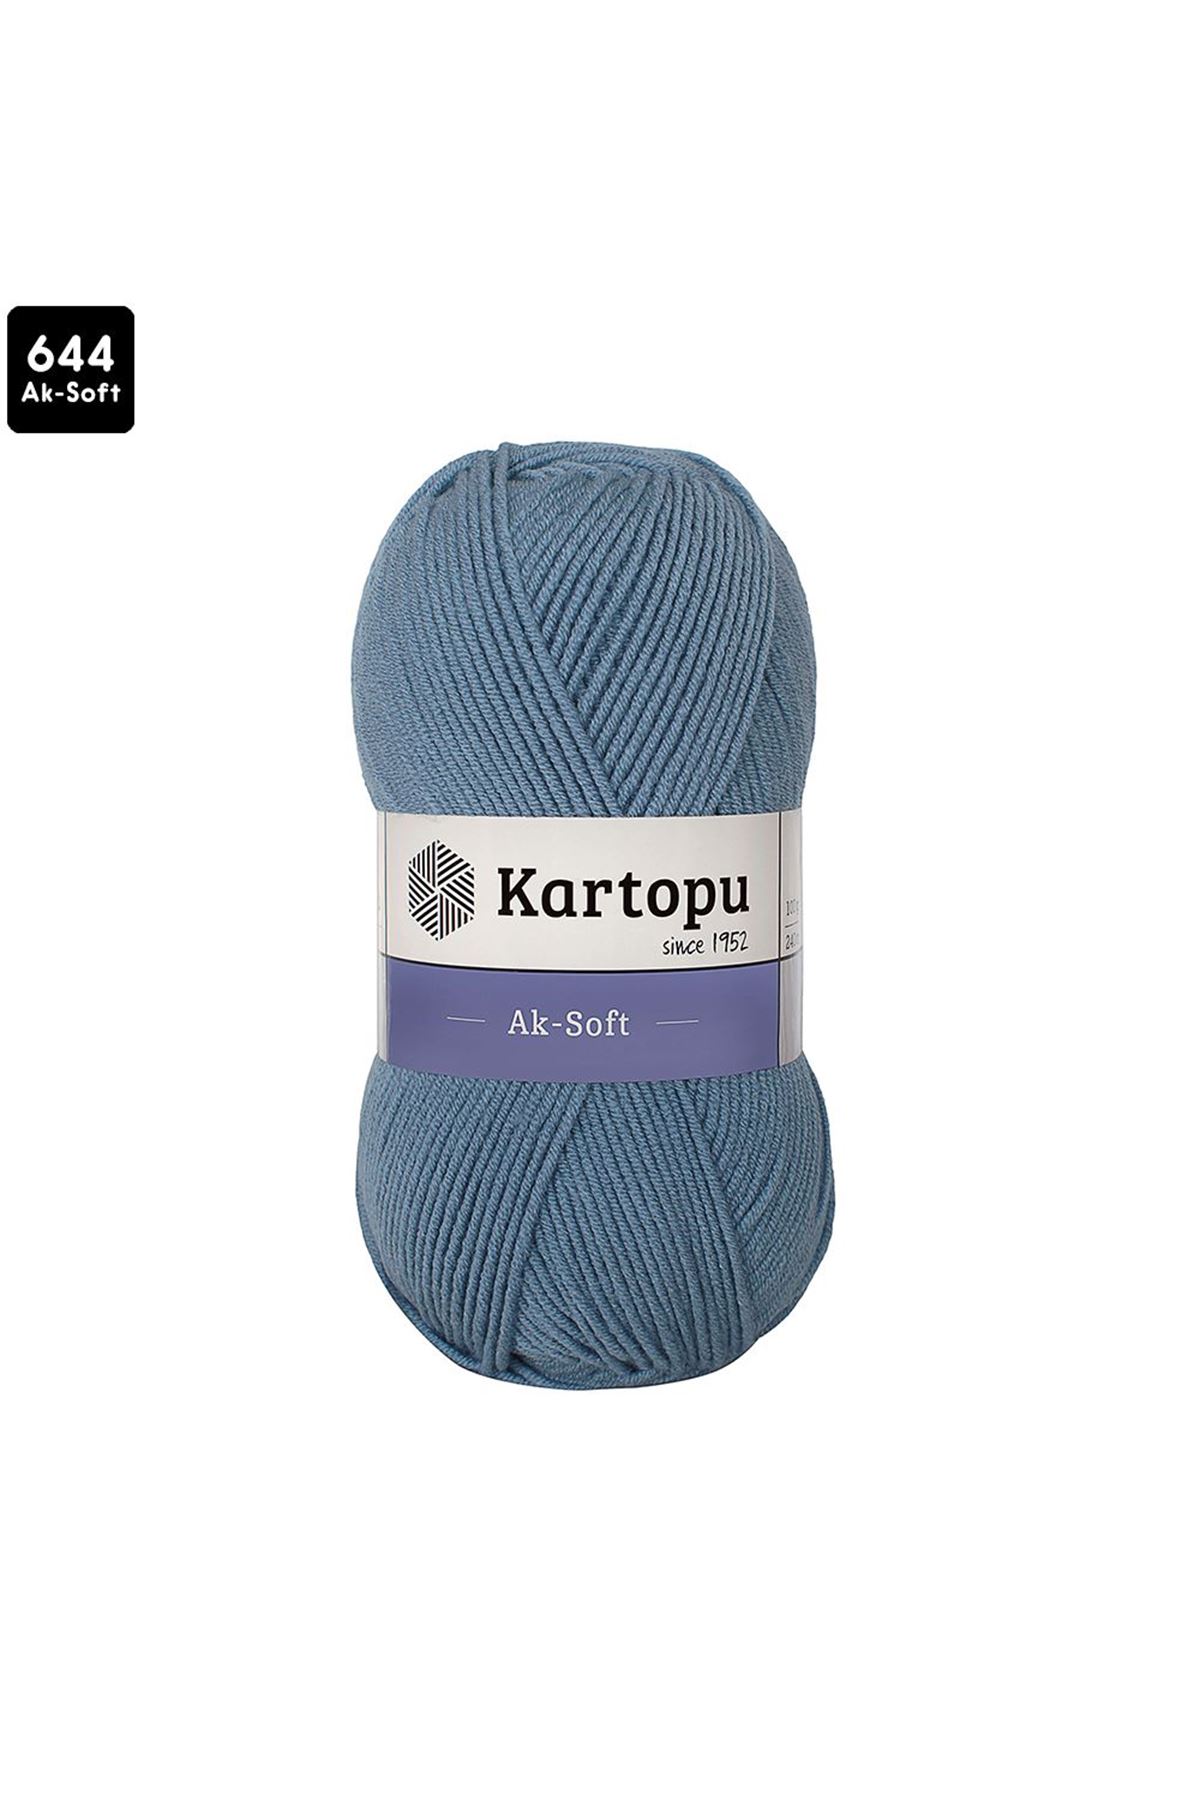 Kartopu Ak-Soft Renk No:644